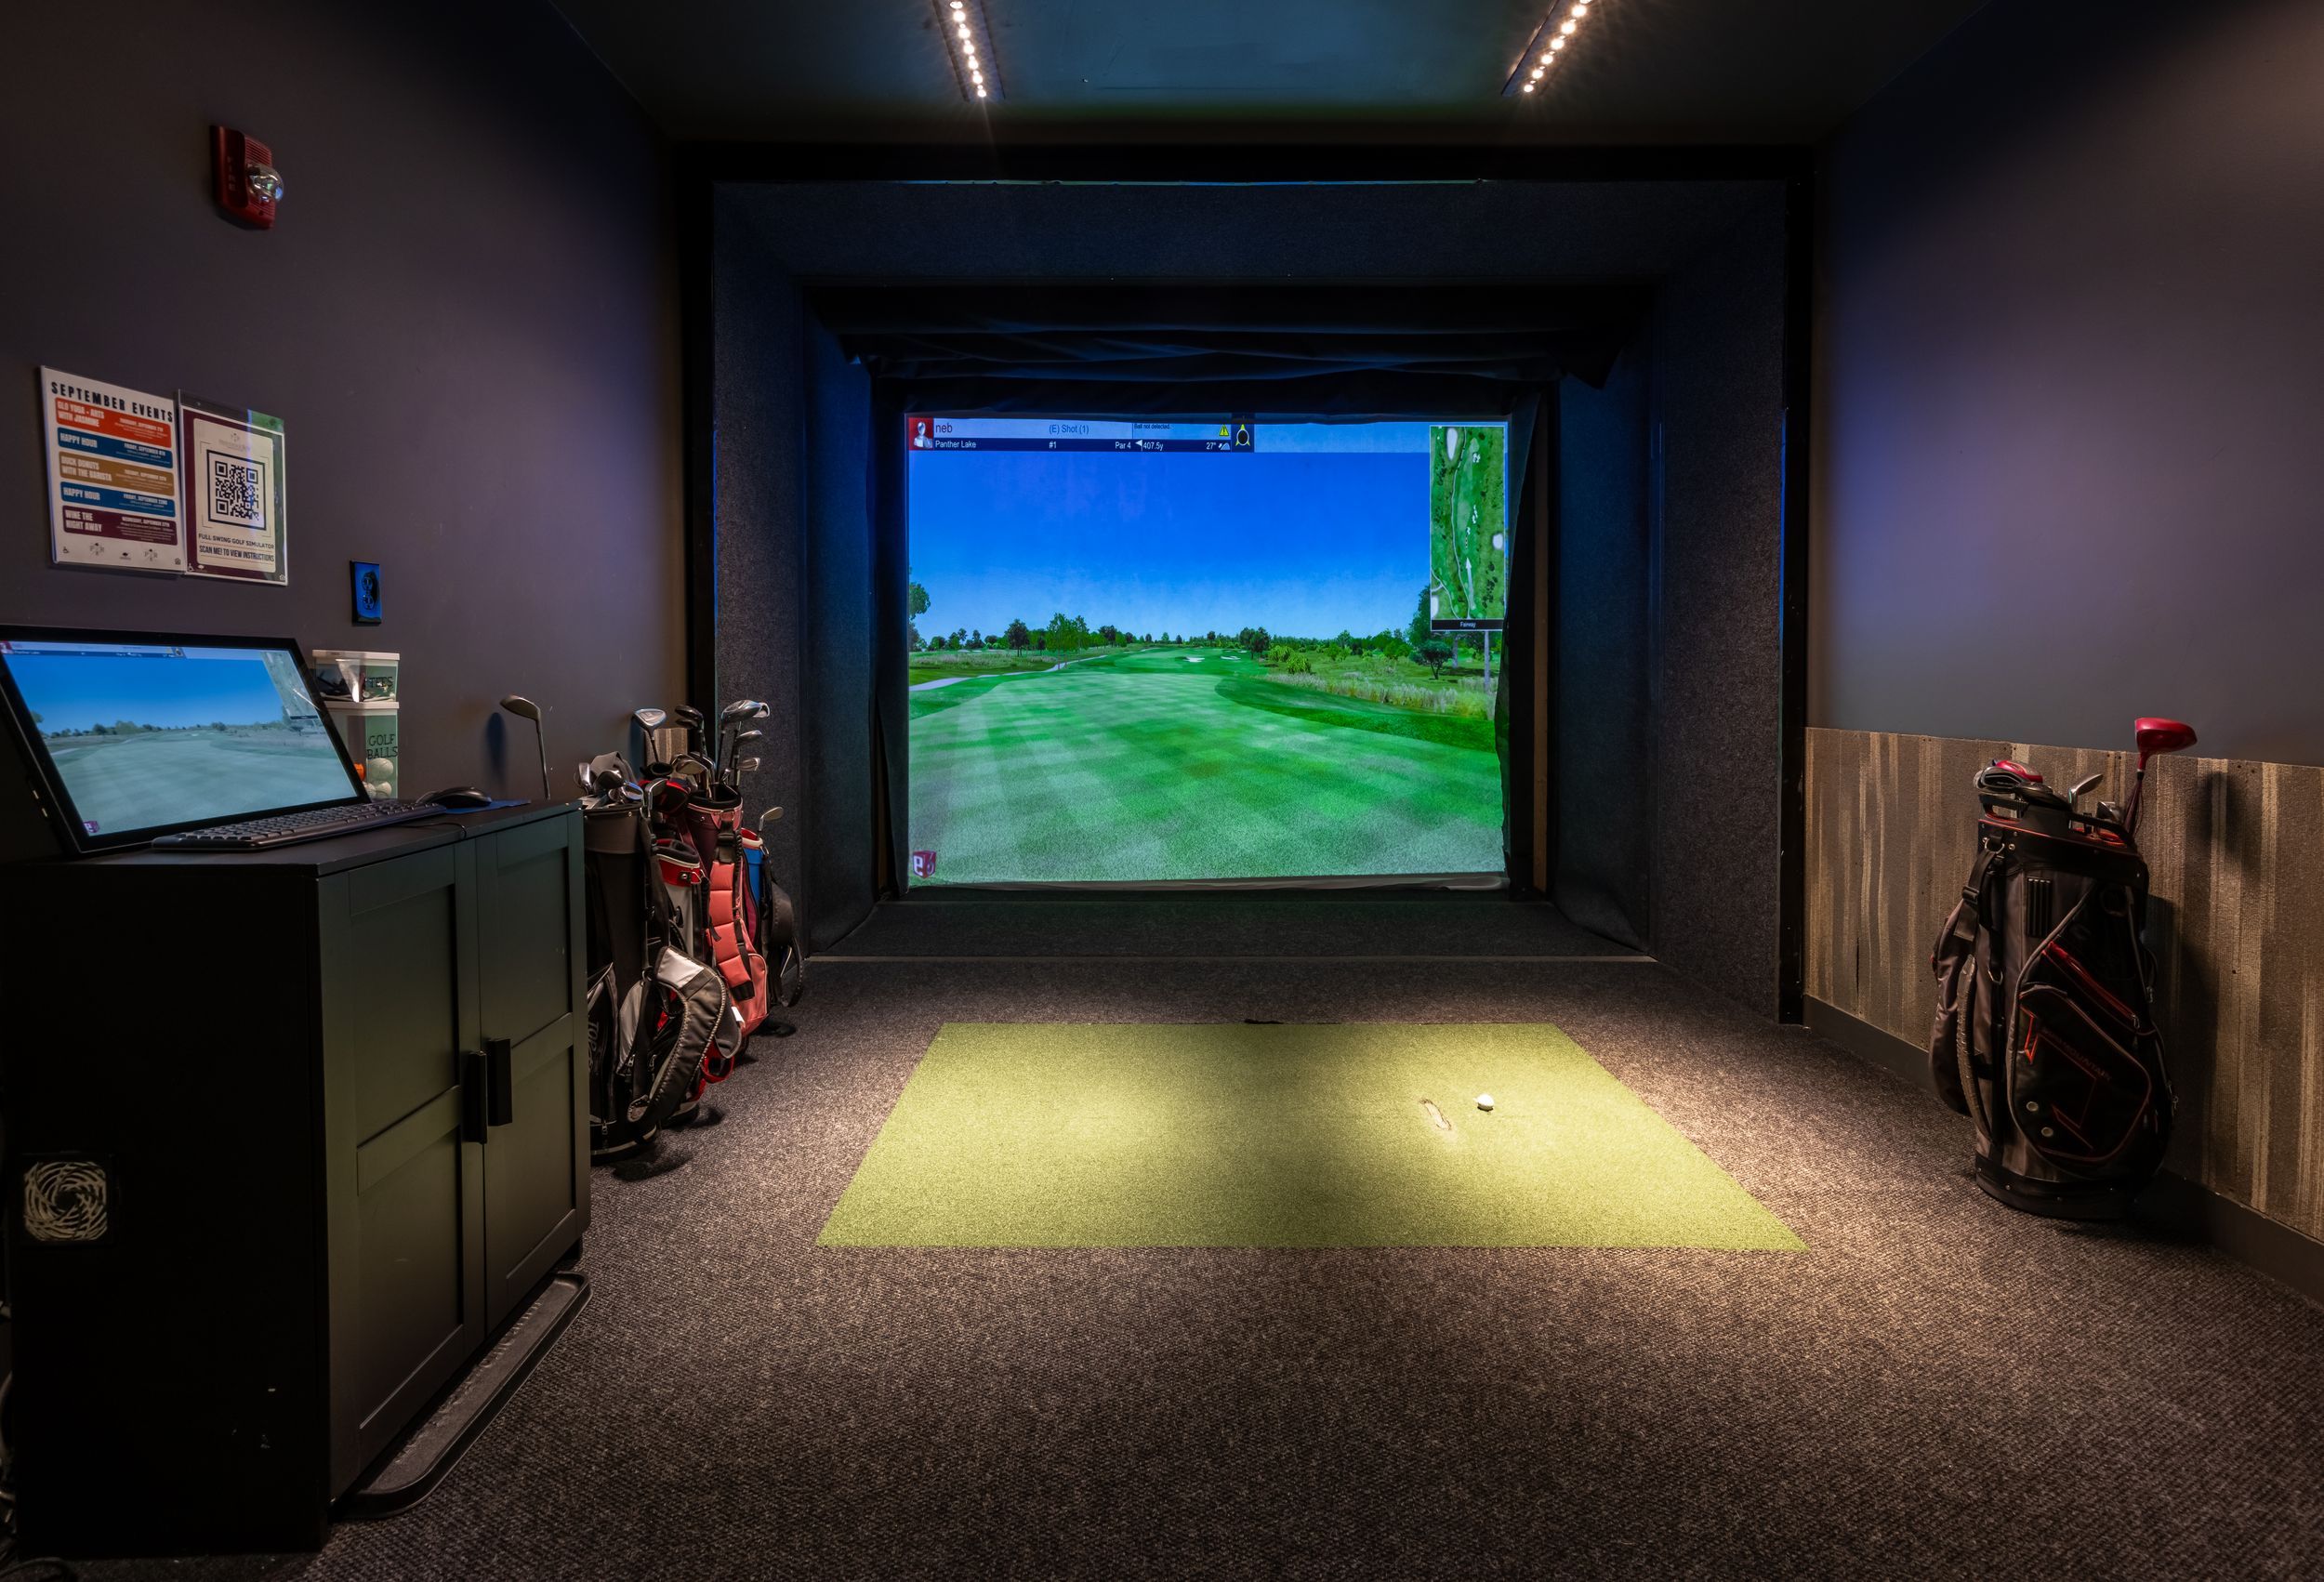 Golf simulator with bag of golf clubs